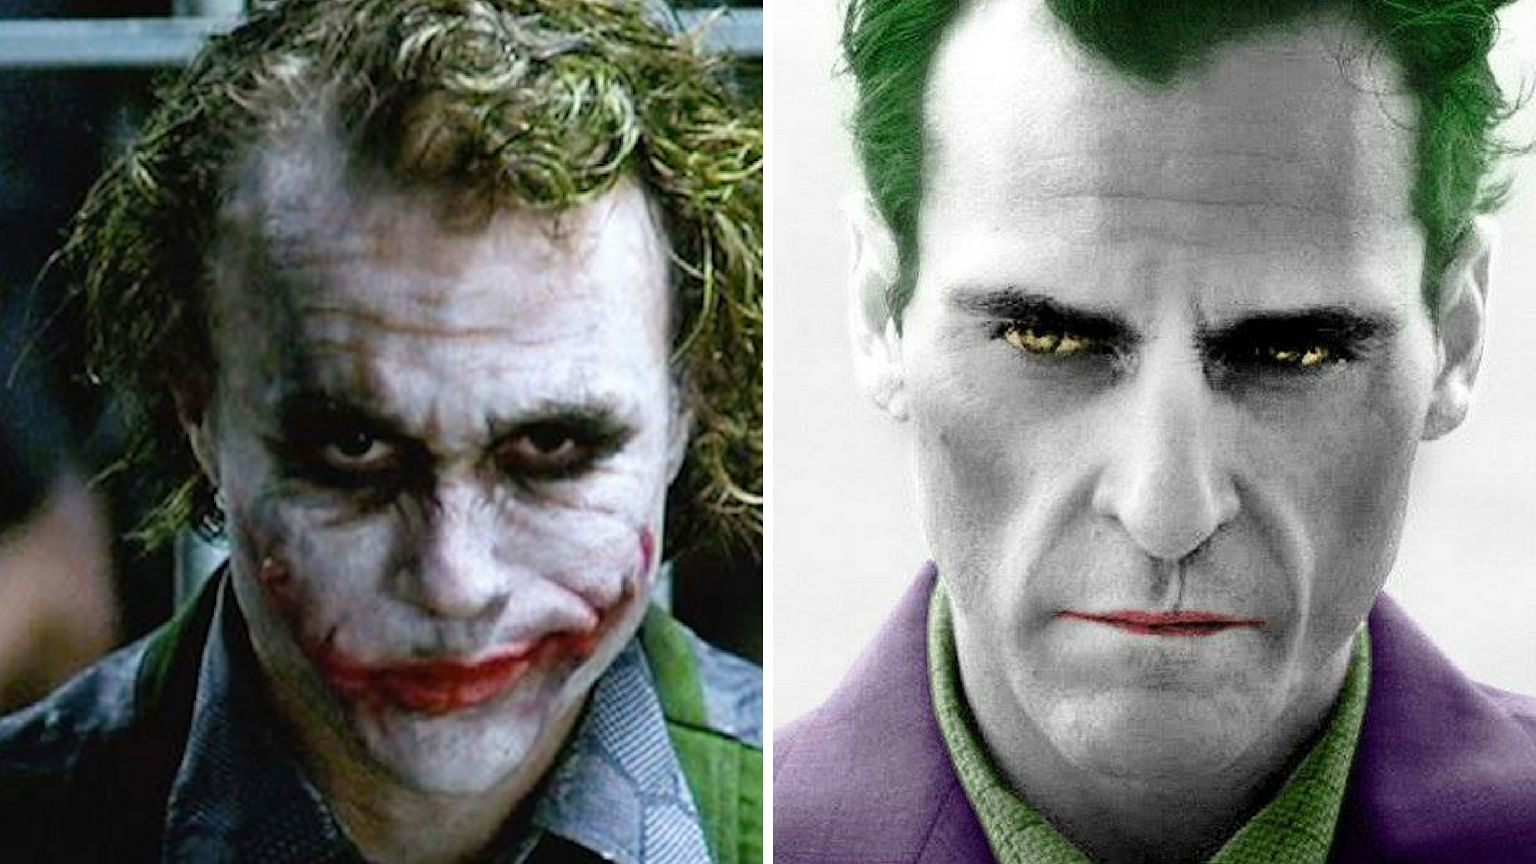 Joaquin Phoenix will portray The Joker in the origin story.